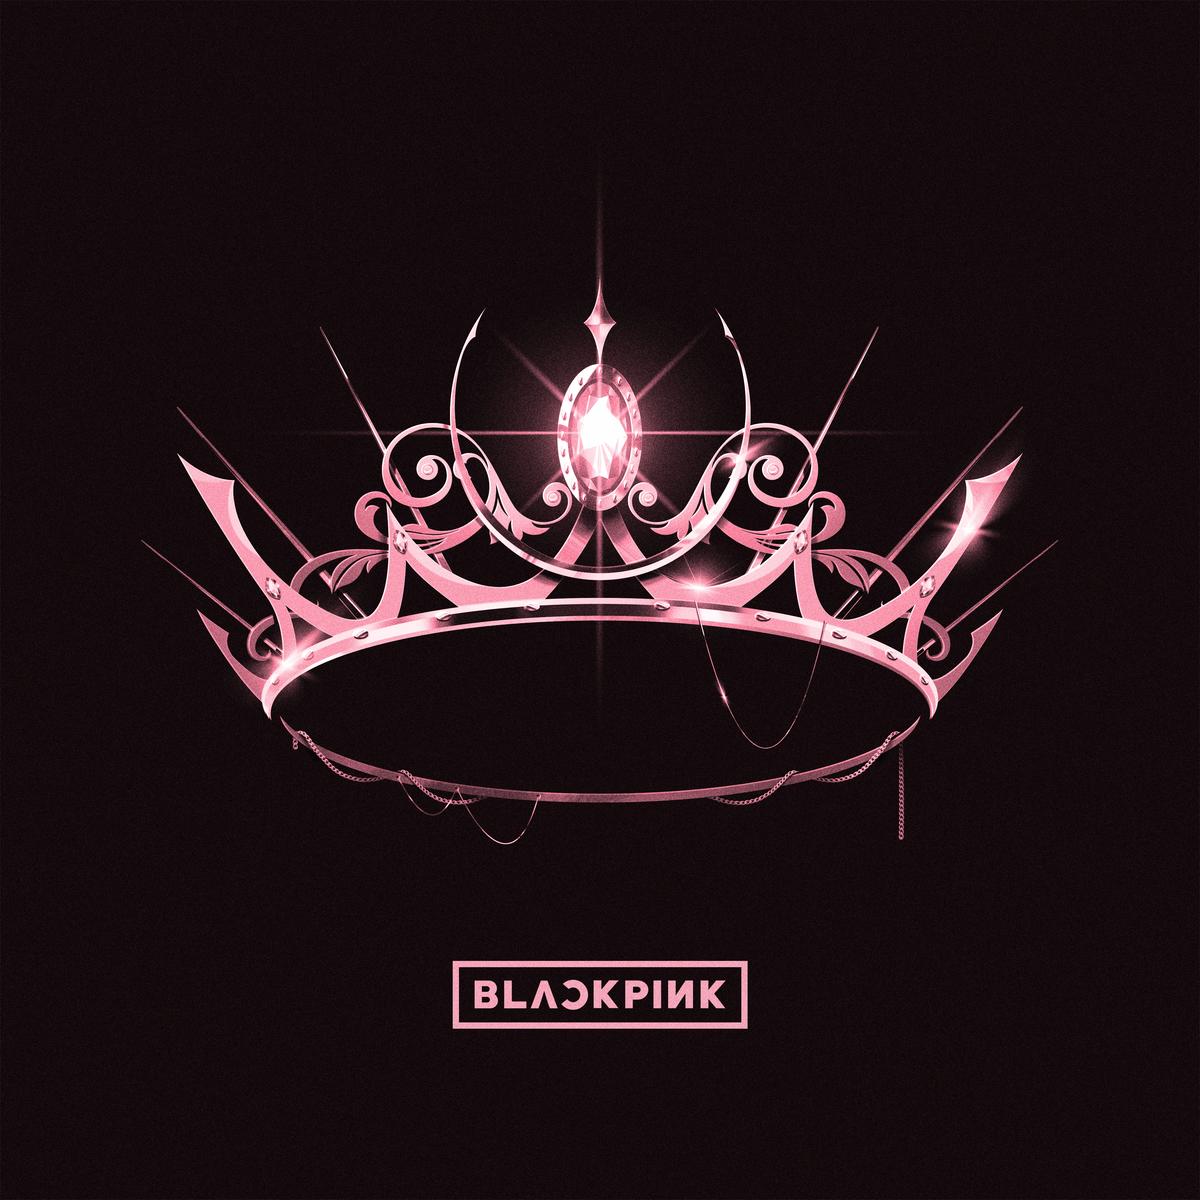 BLACKPINK & Cardi B Live Life Freely On “Bet You Wanna”